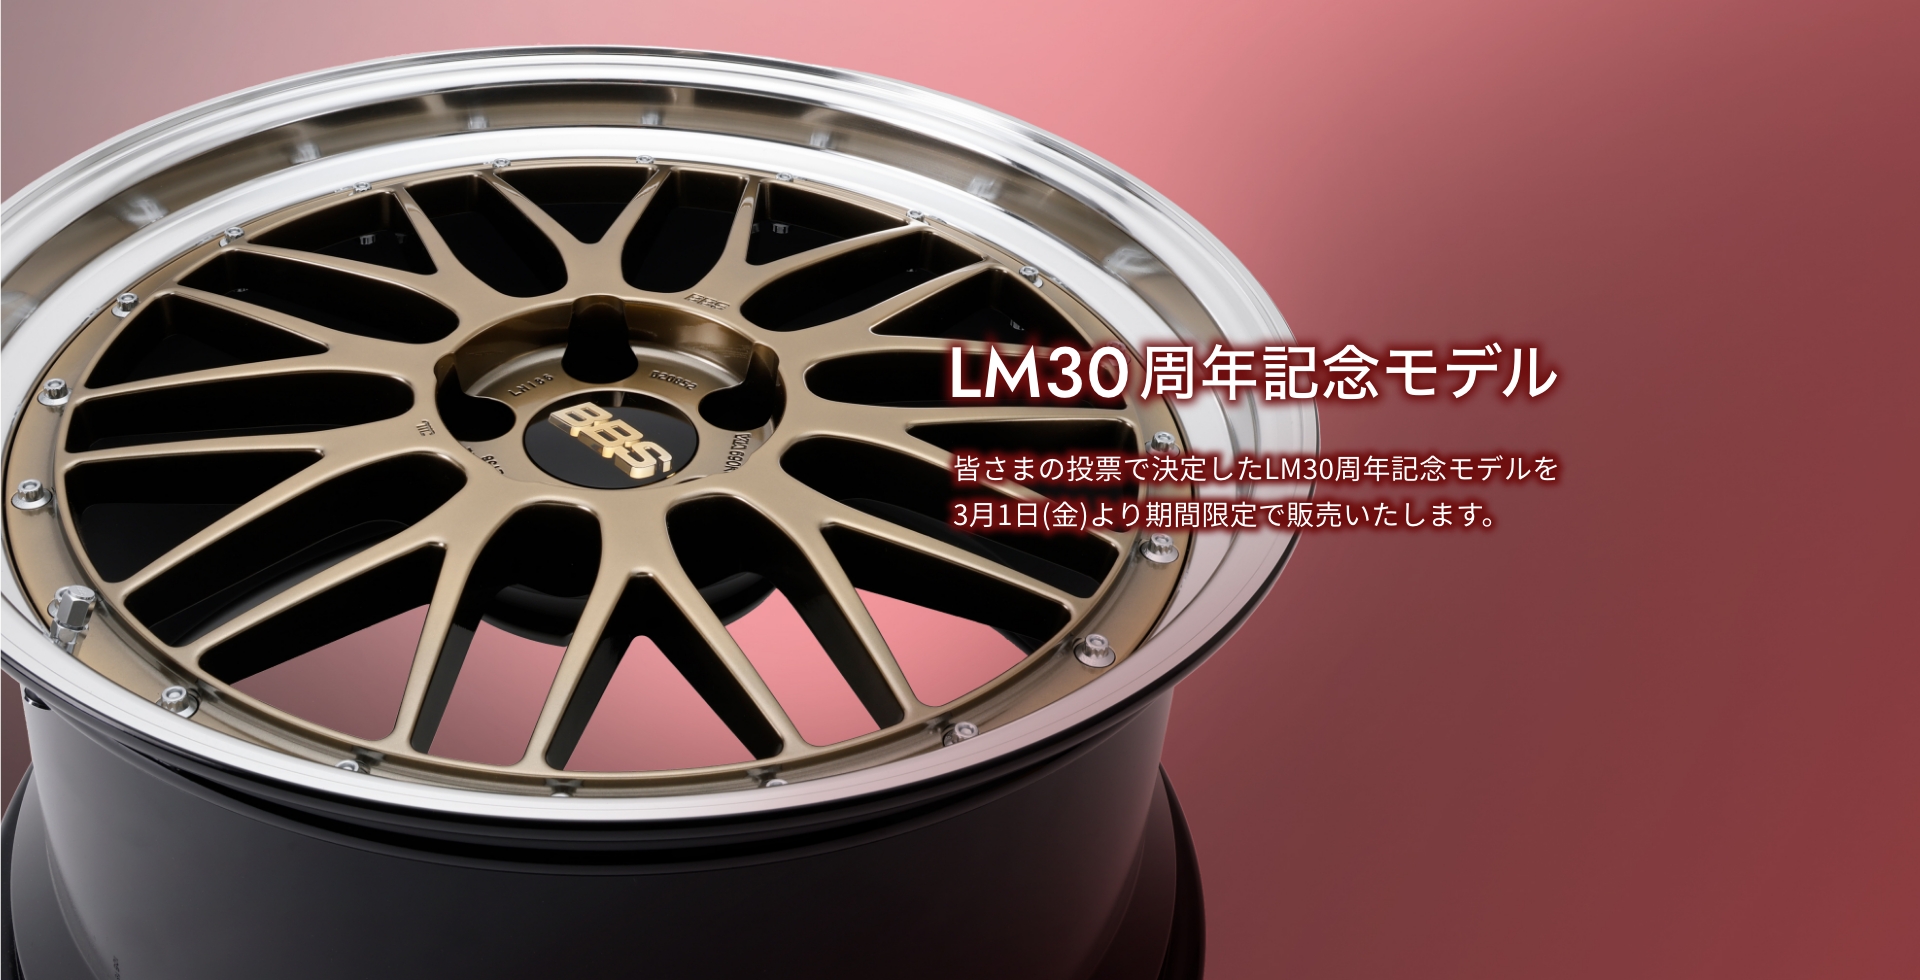 LM30周年記念モデル 皆さまの投票で決定したLM30周年記念モデルを3月1日(金)より期間限定で販売いたします。